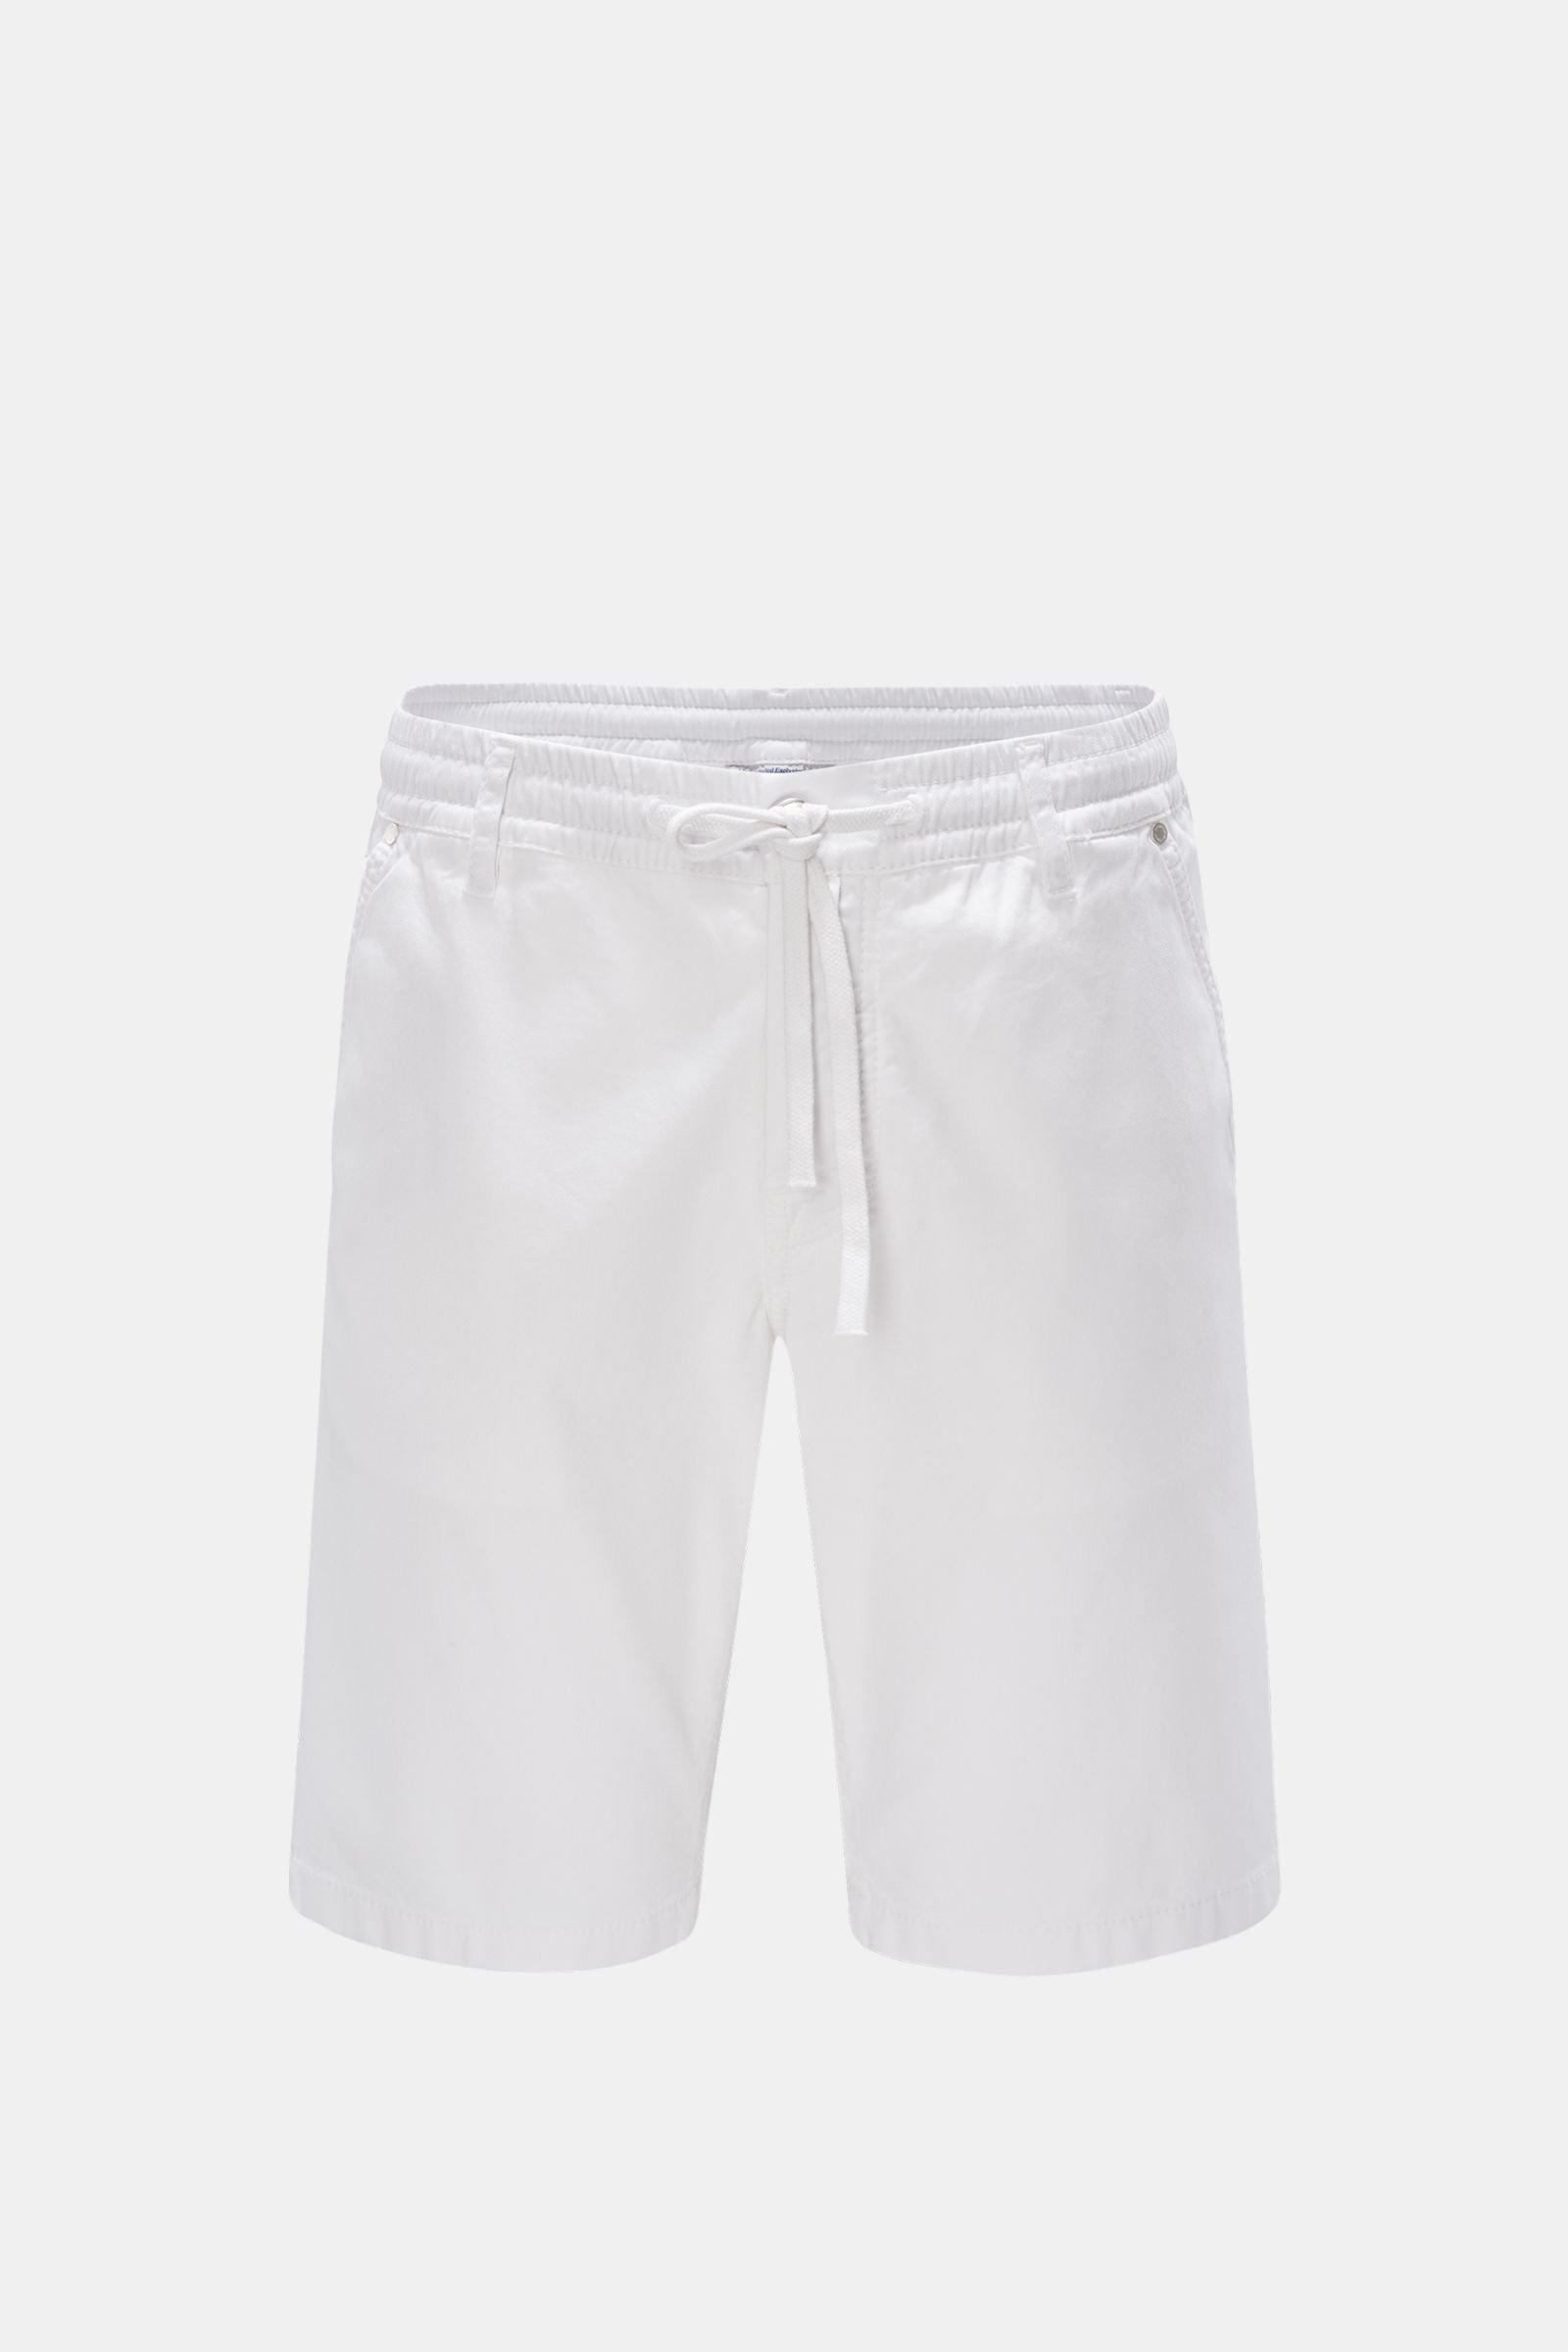 Bermuda shorts 'J6154 Comfort' white